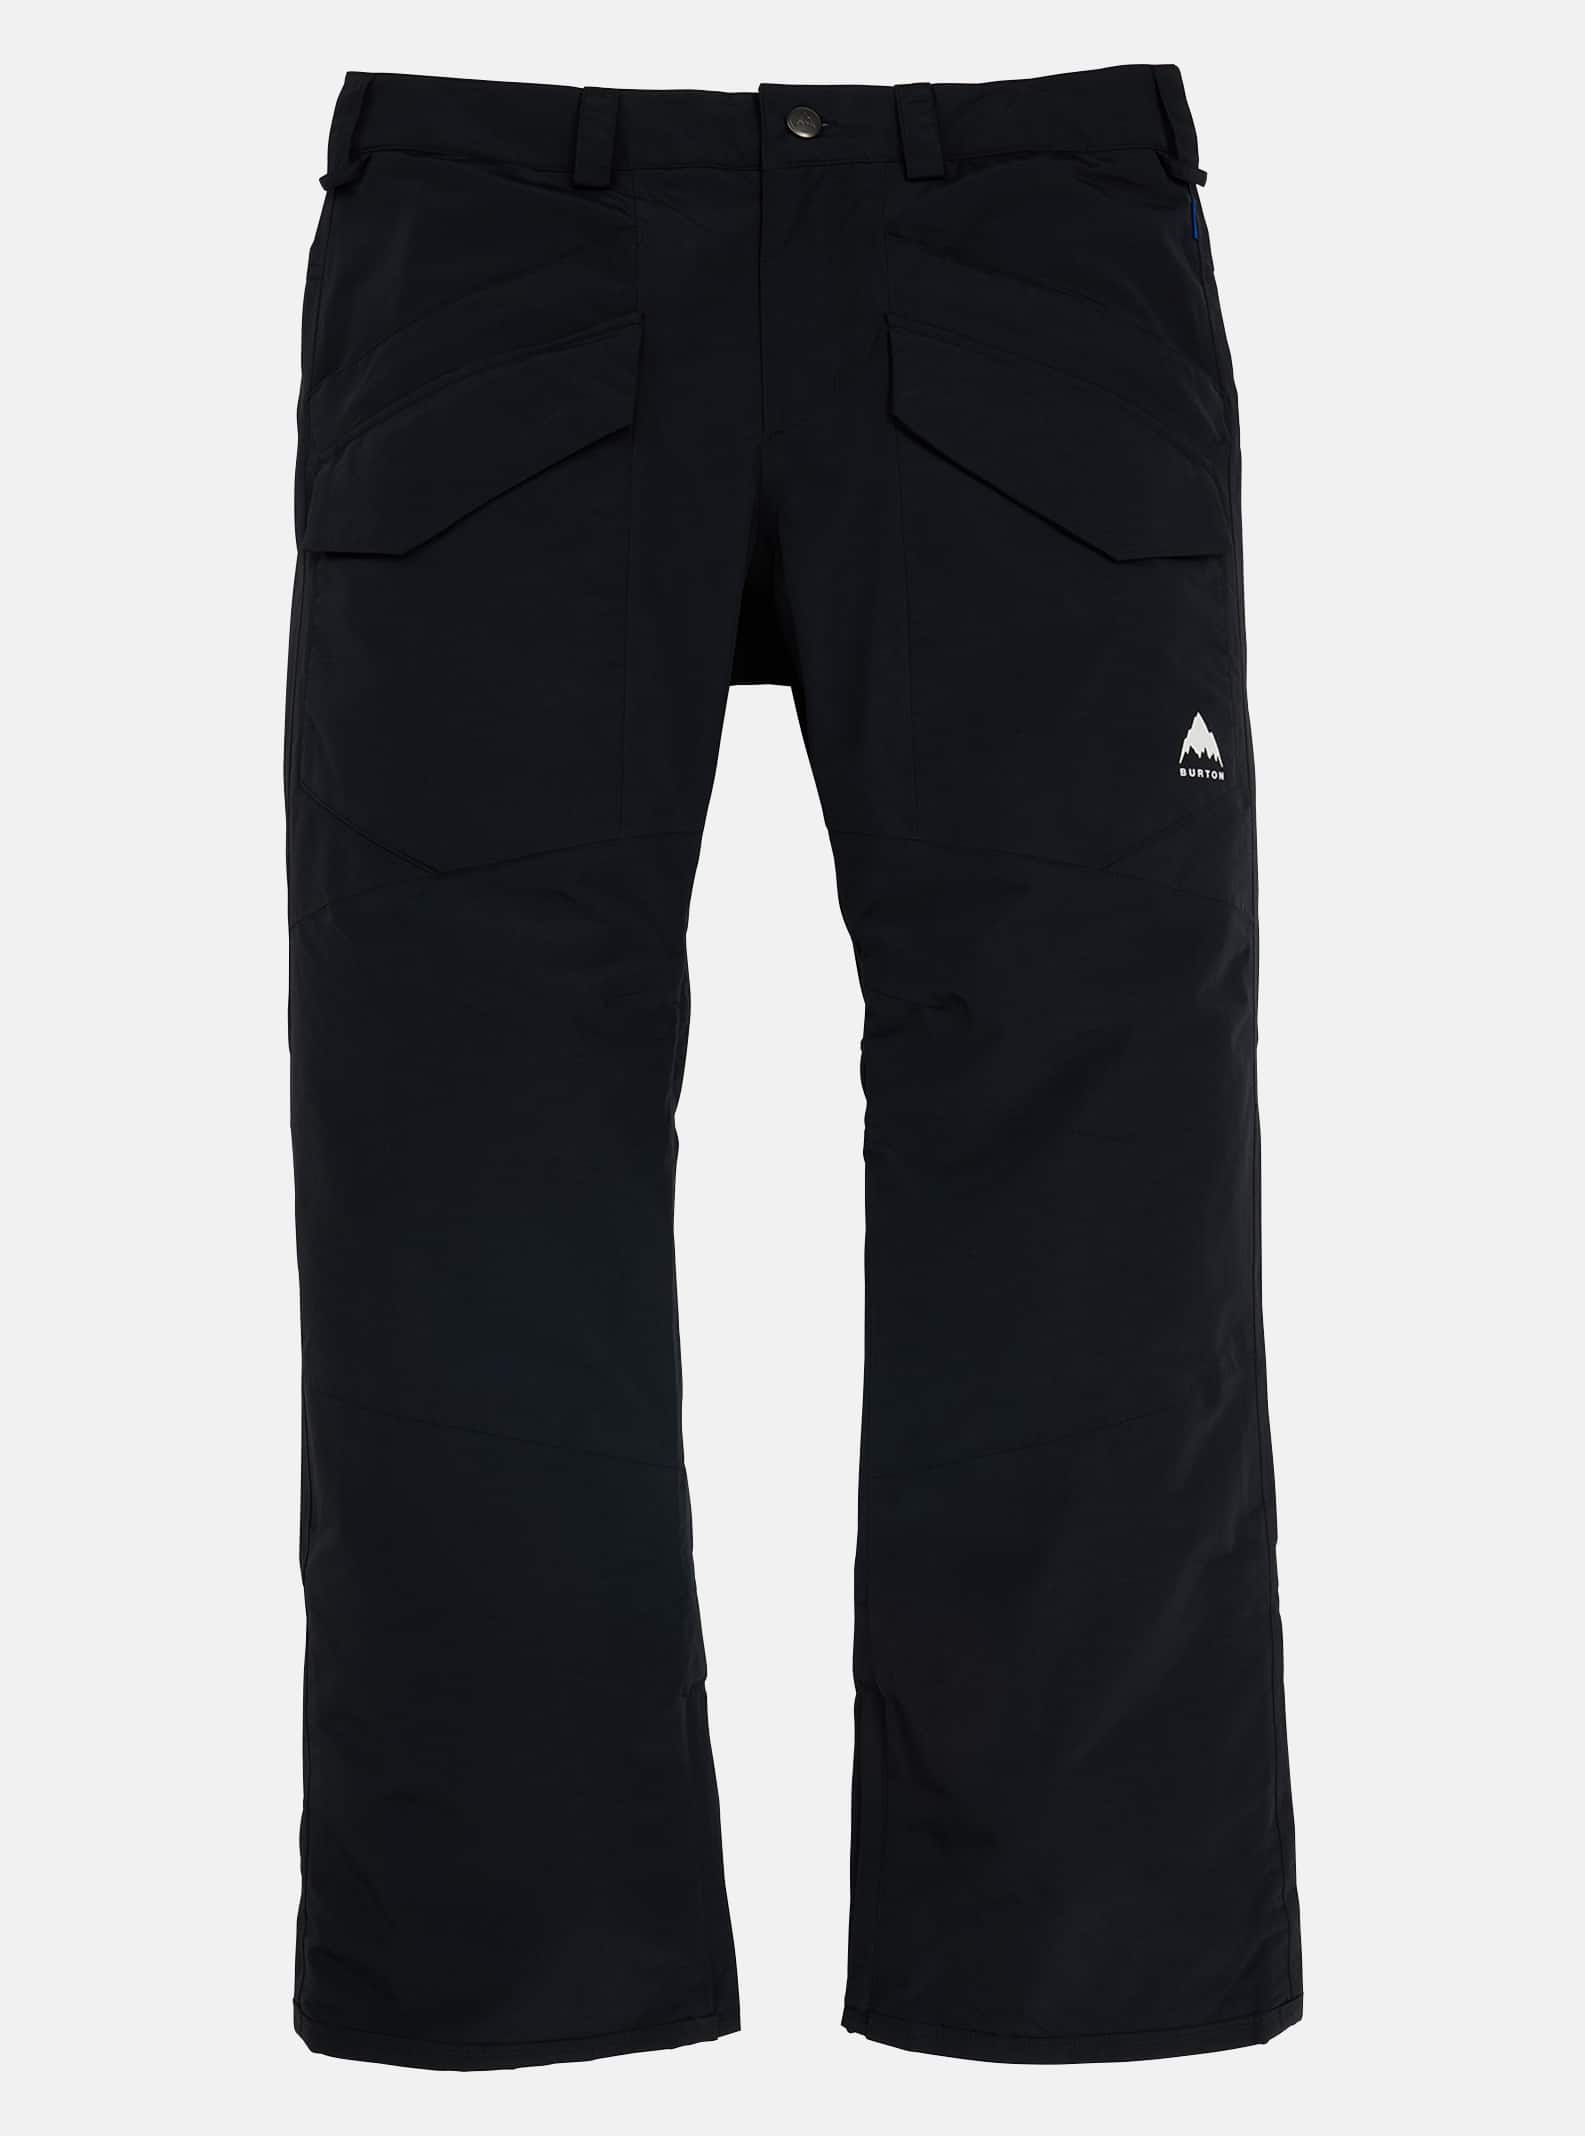 Boots Staydry Pants Men Medium - 192 Pants (16 Pack Bundle